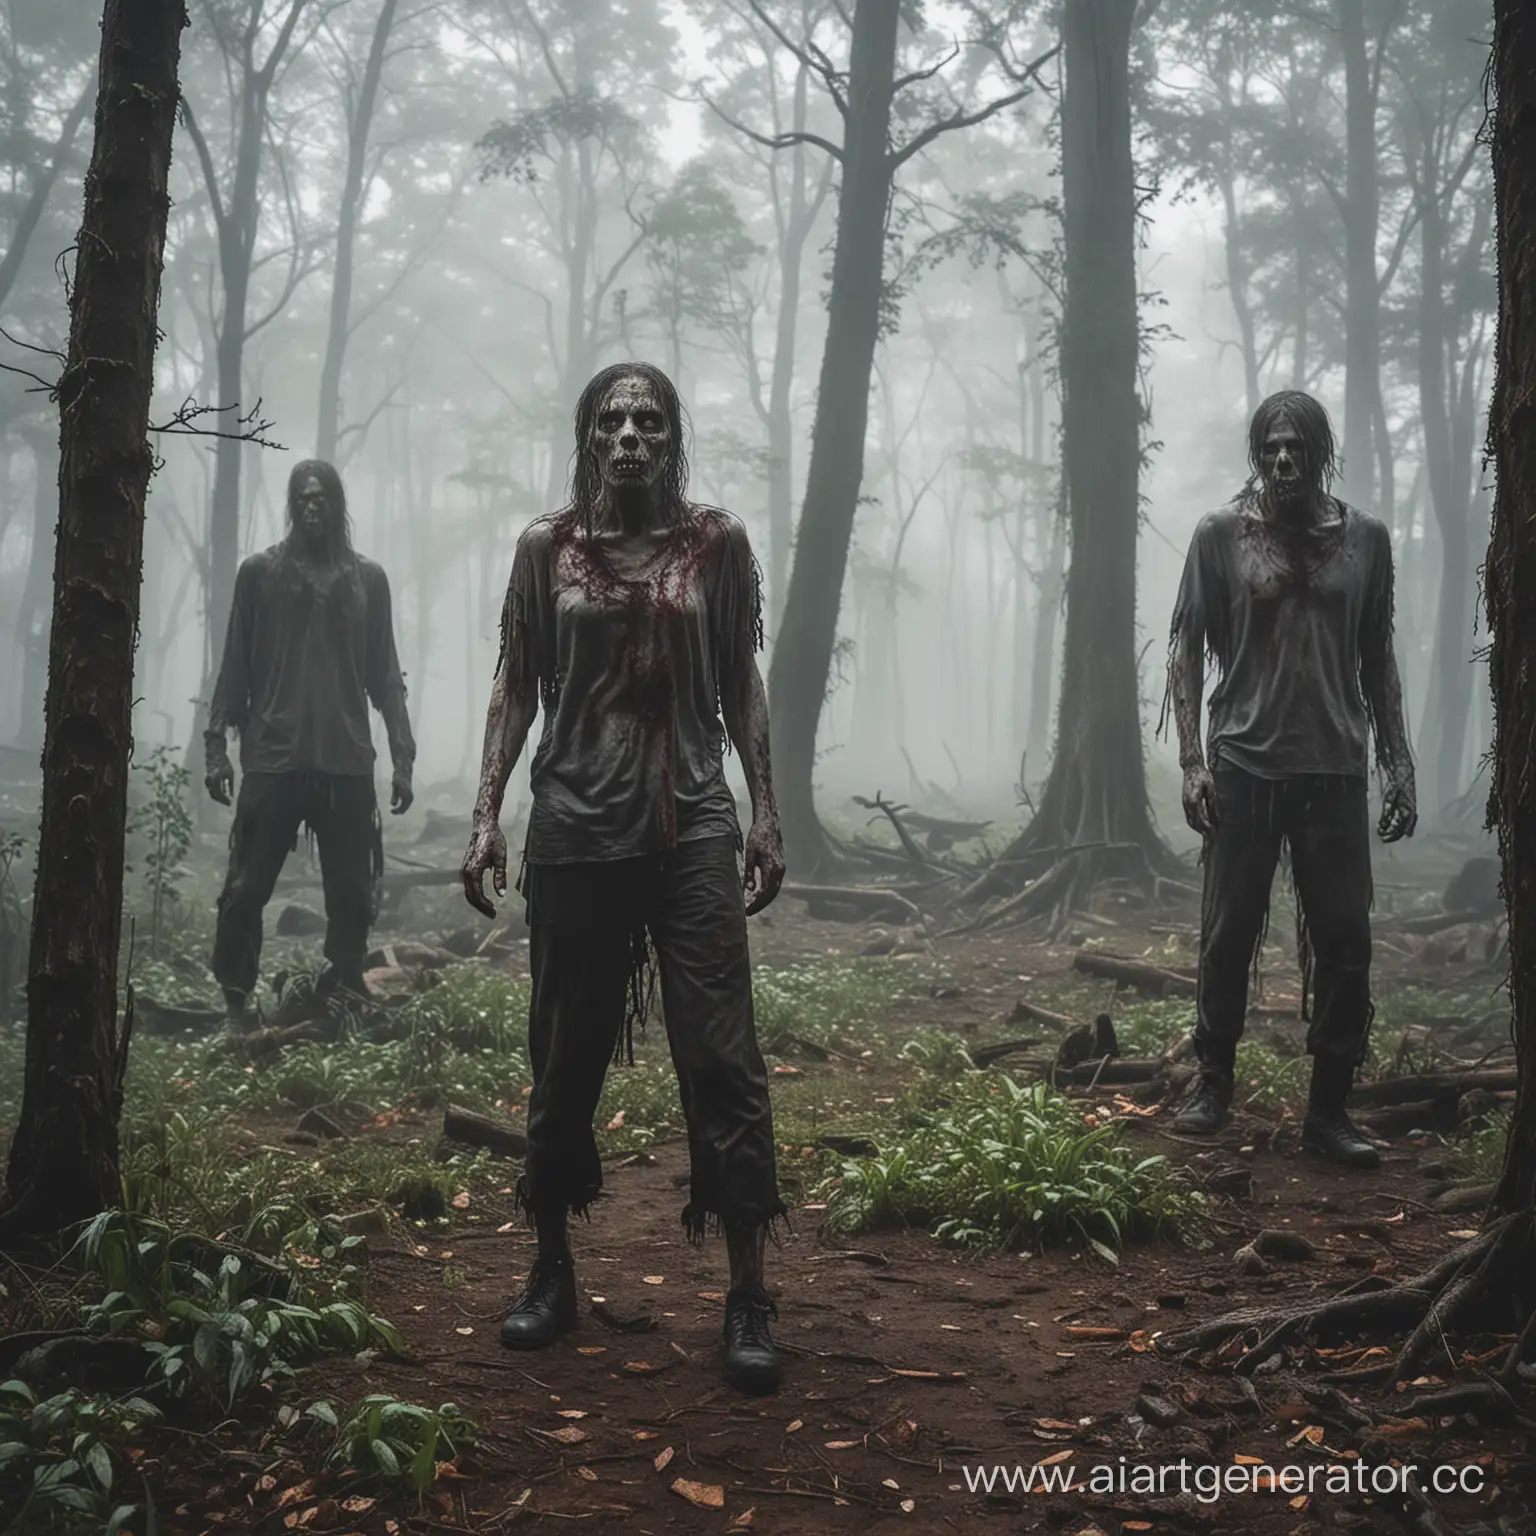 Eerie-Zombie-Encounter-Creepy-Forest-Scene-in-Gloomy-Weather